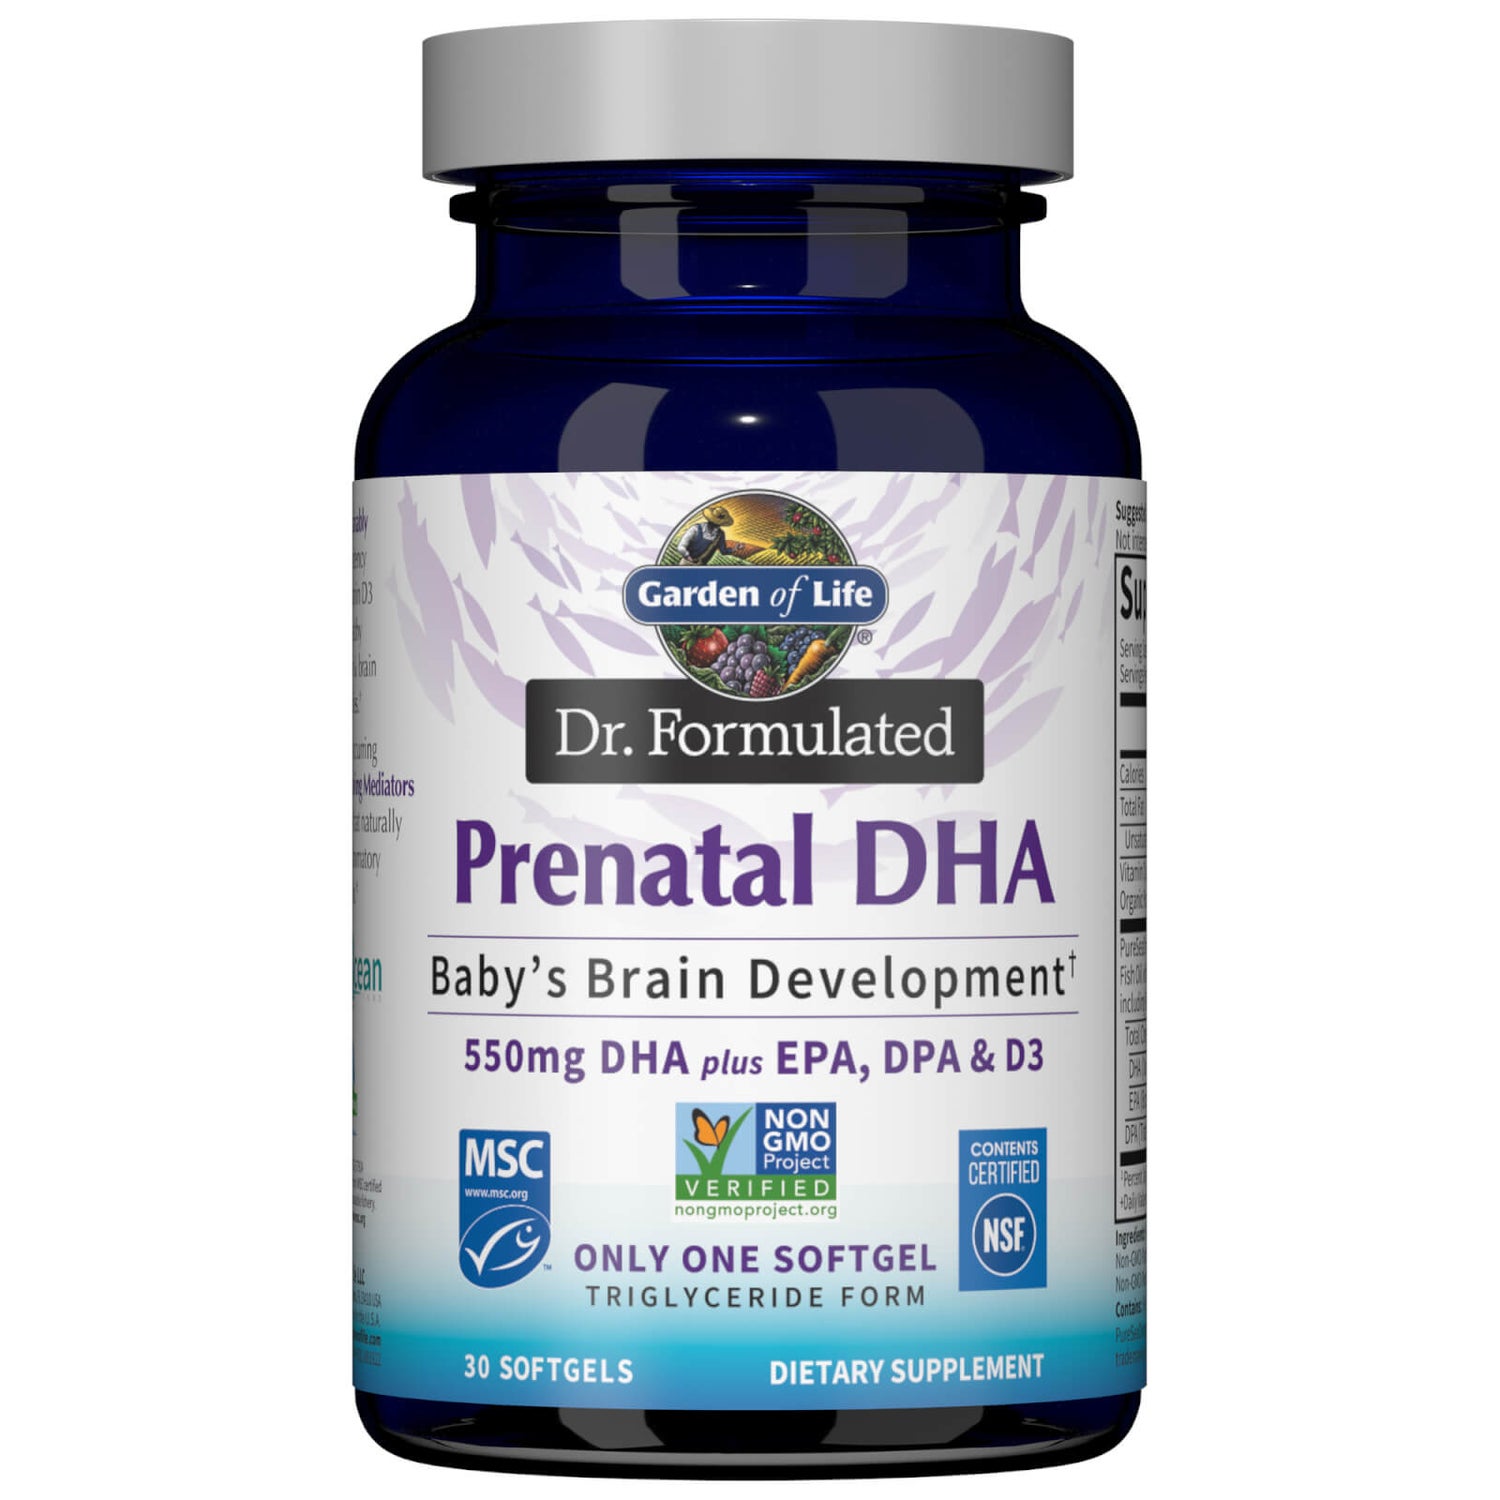 DHA prenatal Dr. Formulated - cápsulas blandas